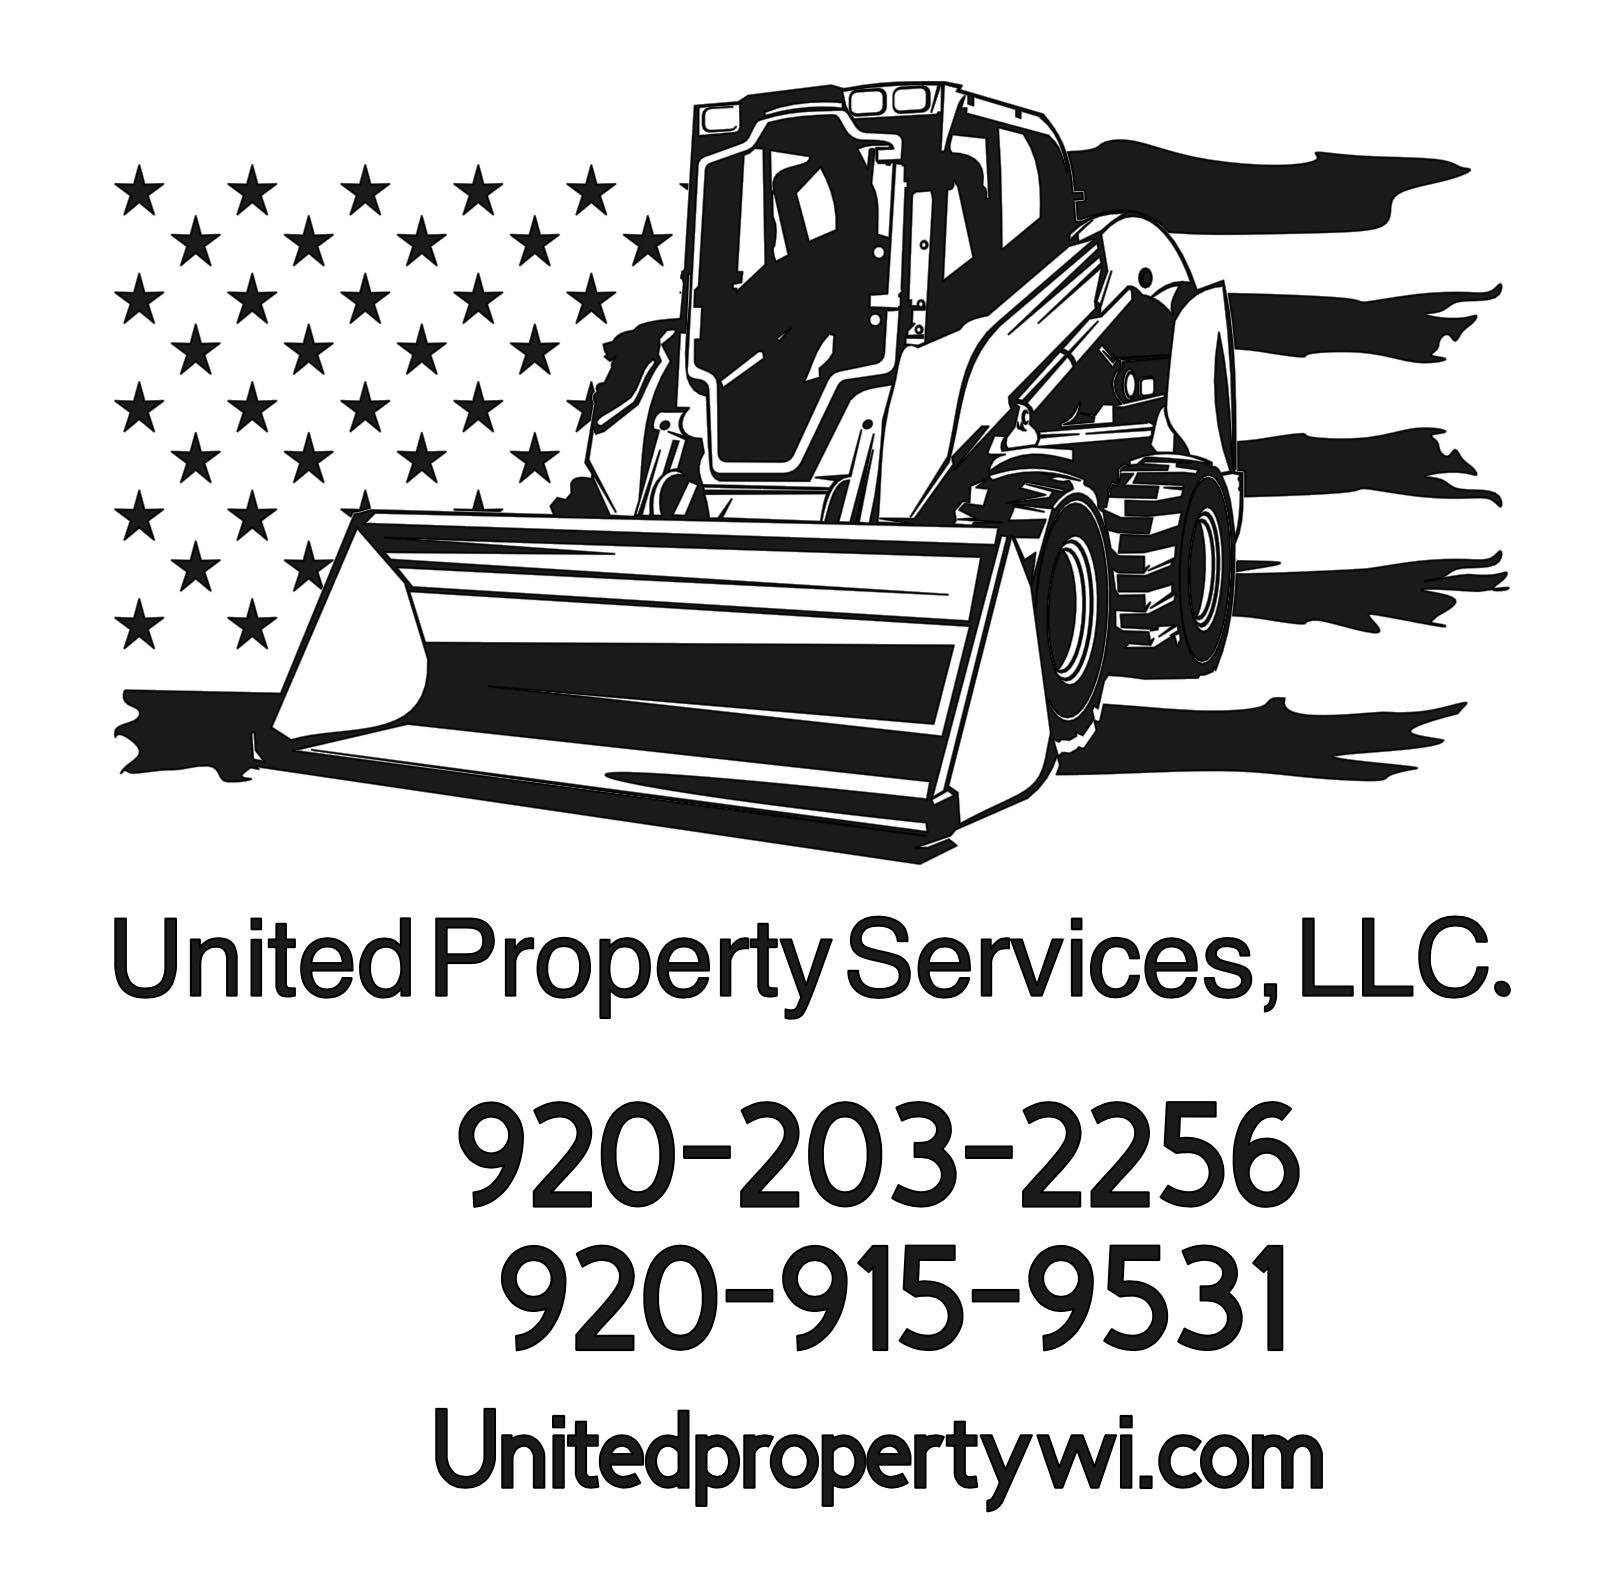 United Property Services Logo